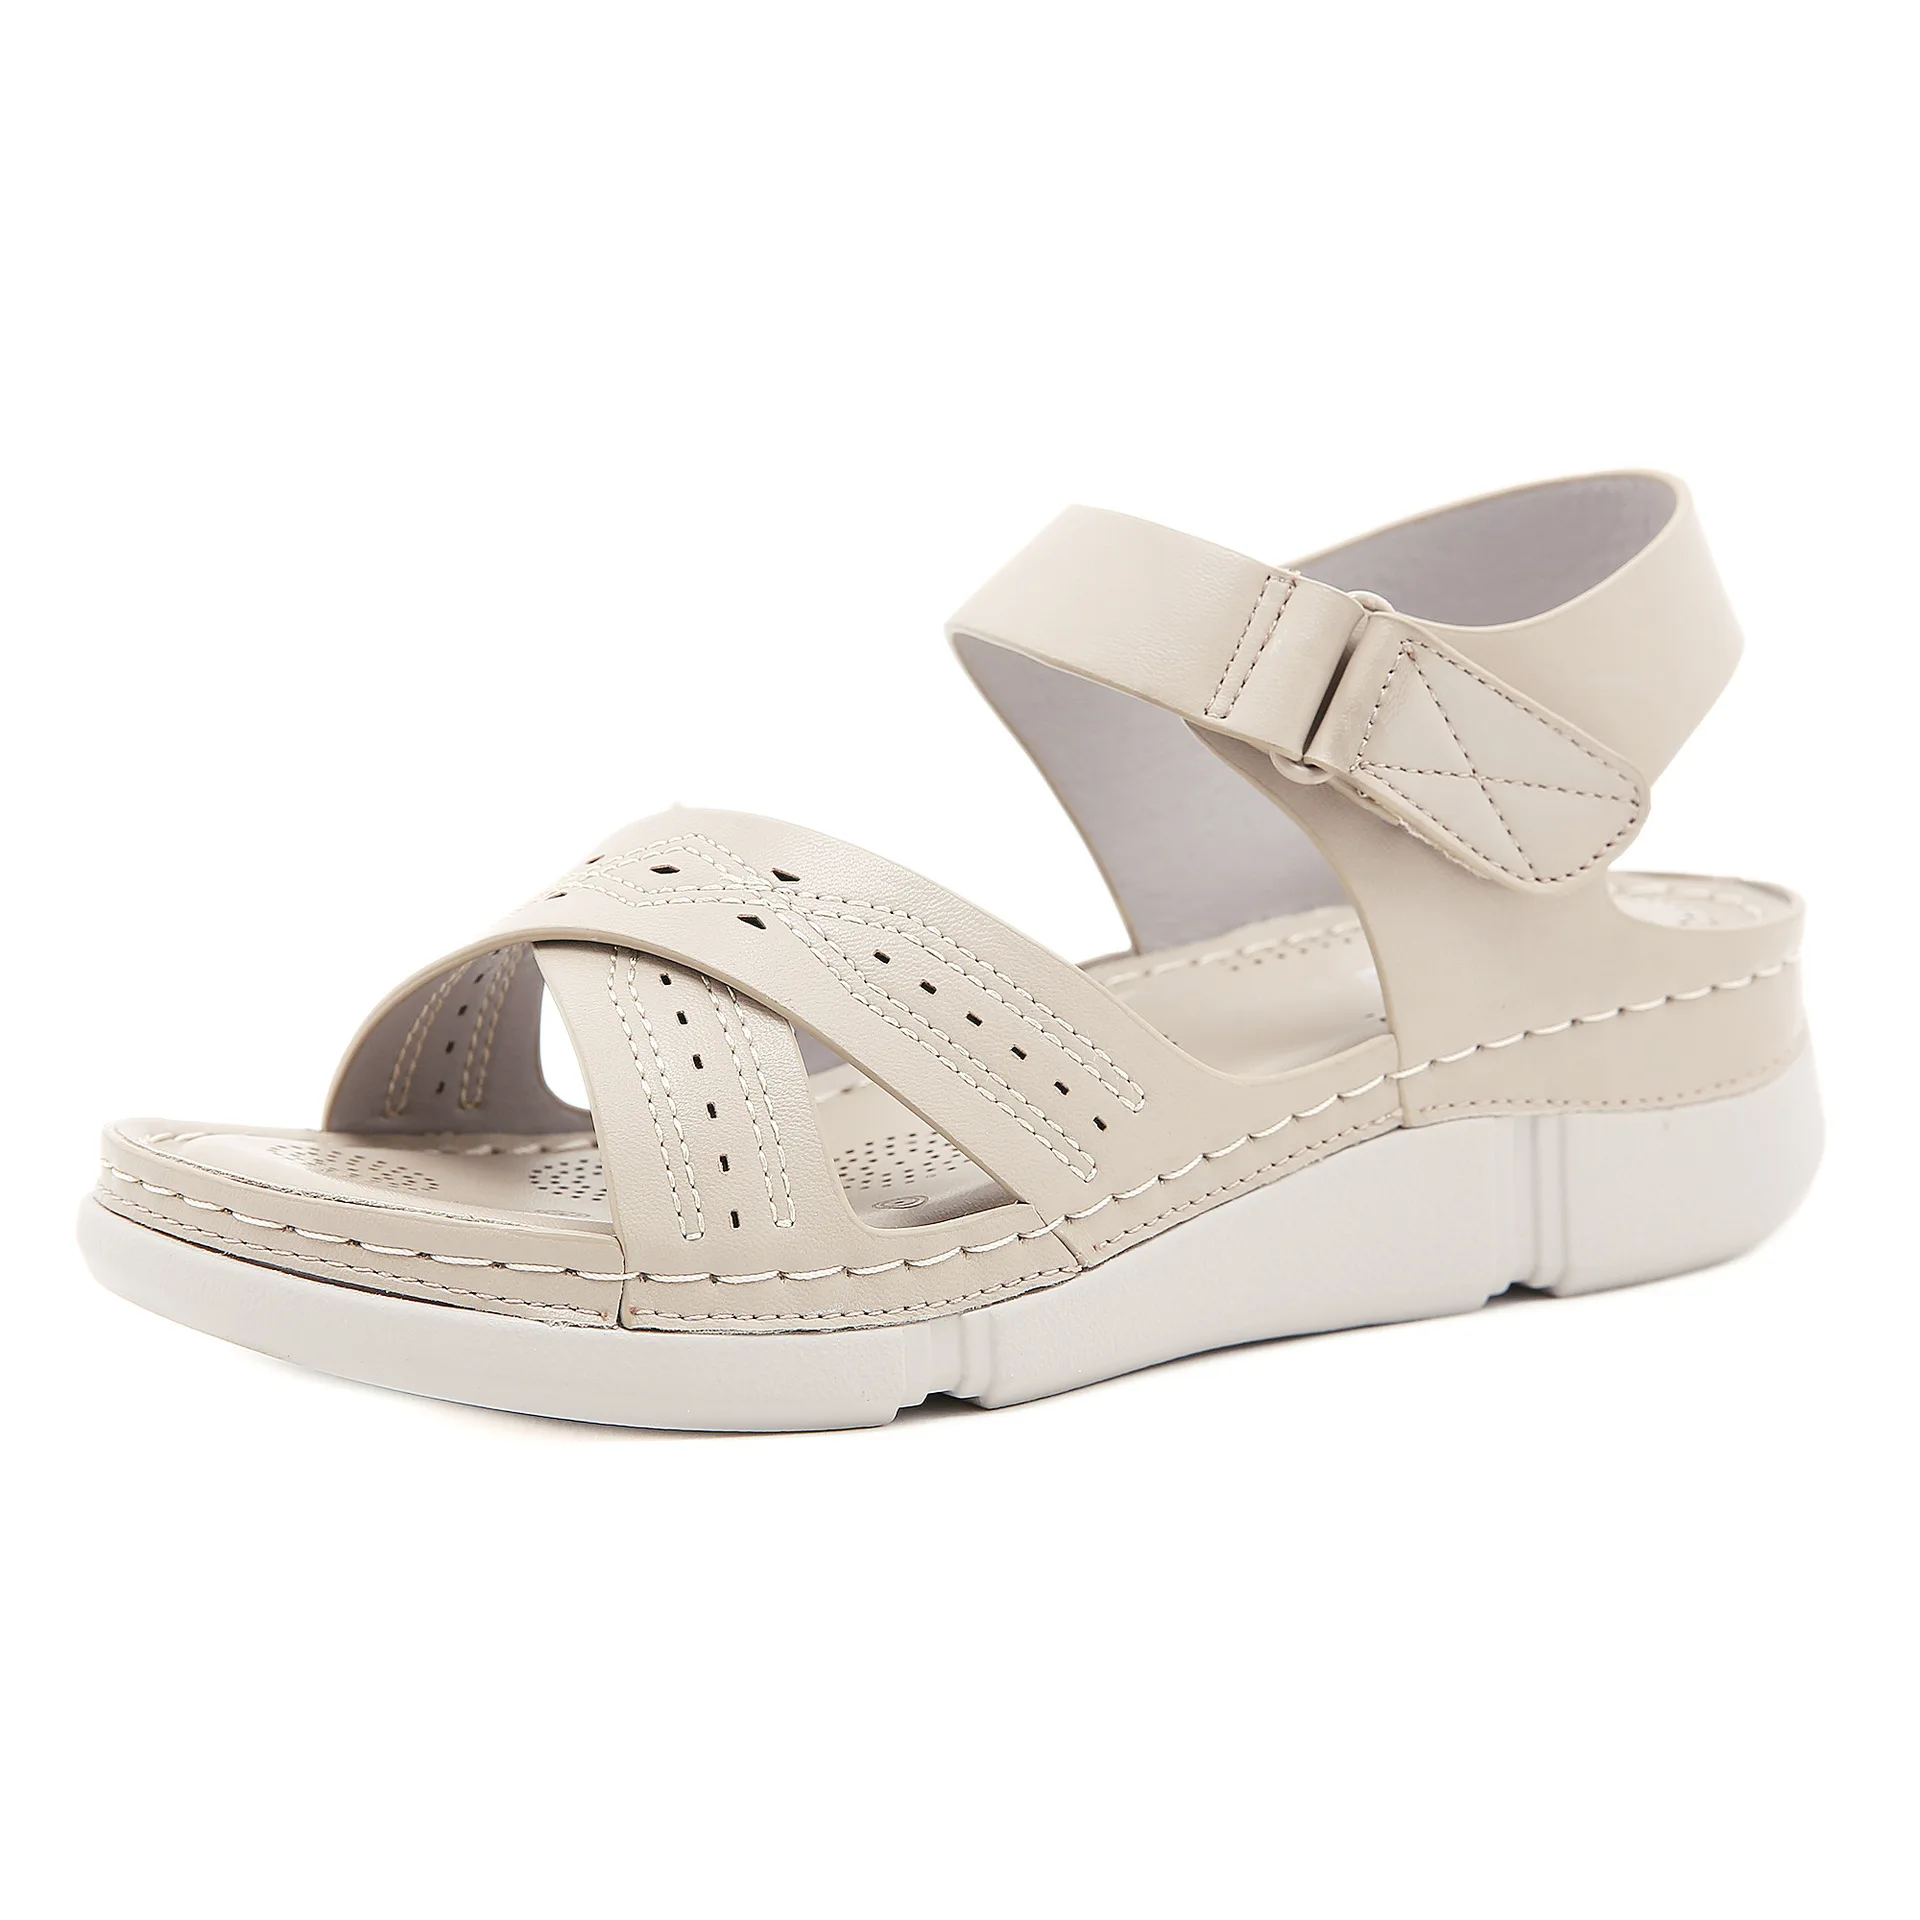 

SIKETU Brand Original Summer Retro Wedge Sandals Casual Womens Shoes Beach Sandal Girls Sewing Threads Blue Apricot Plus Size